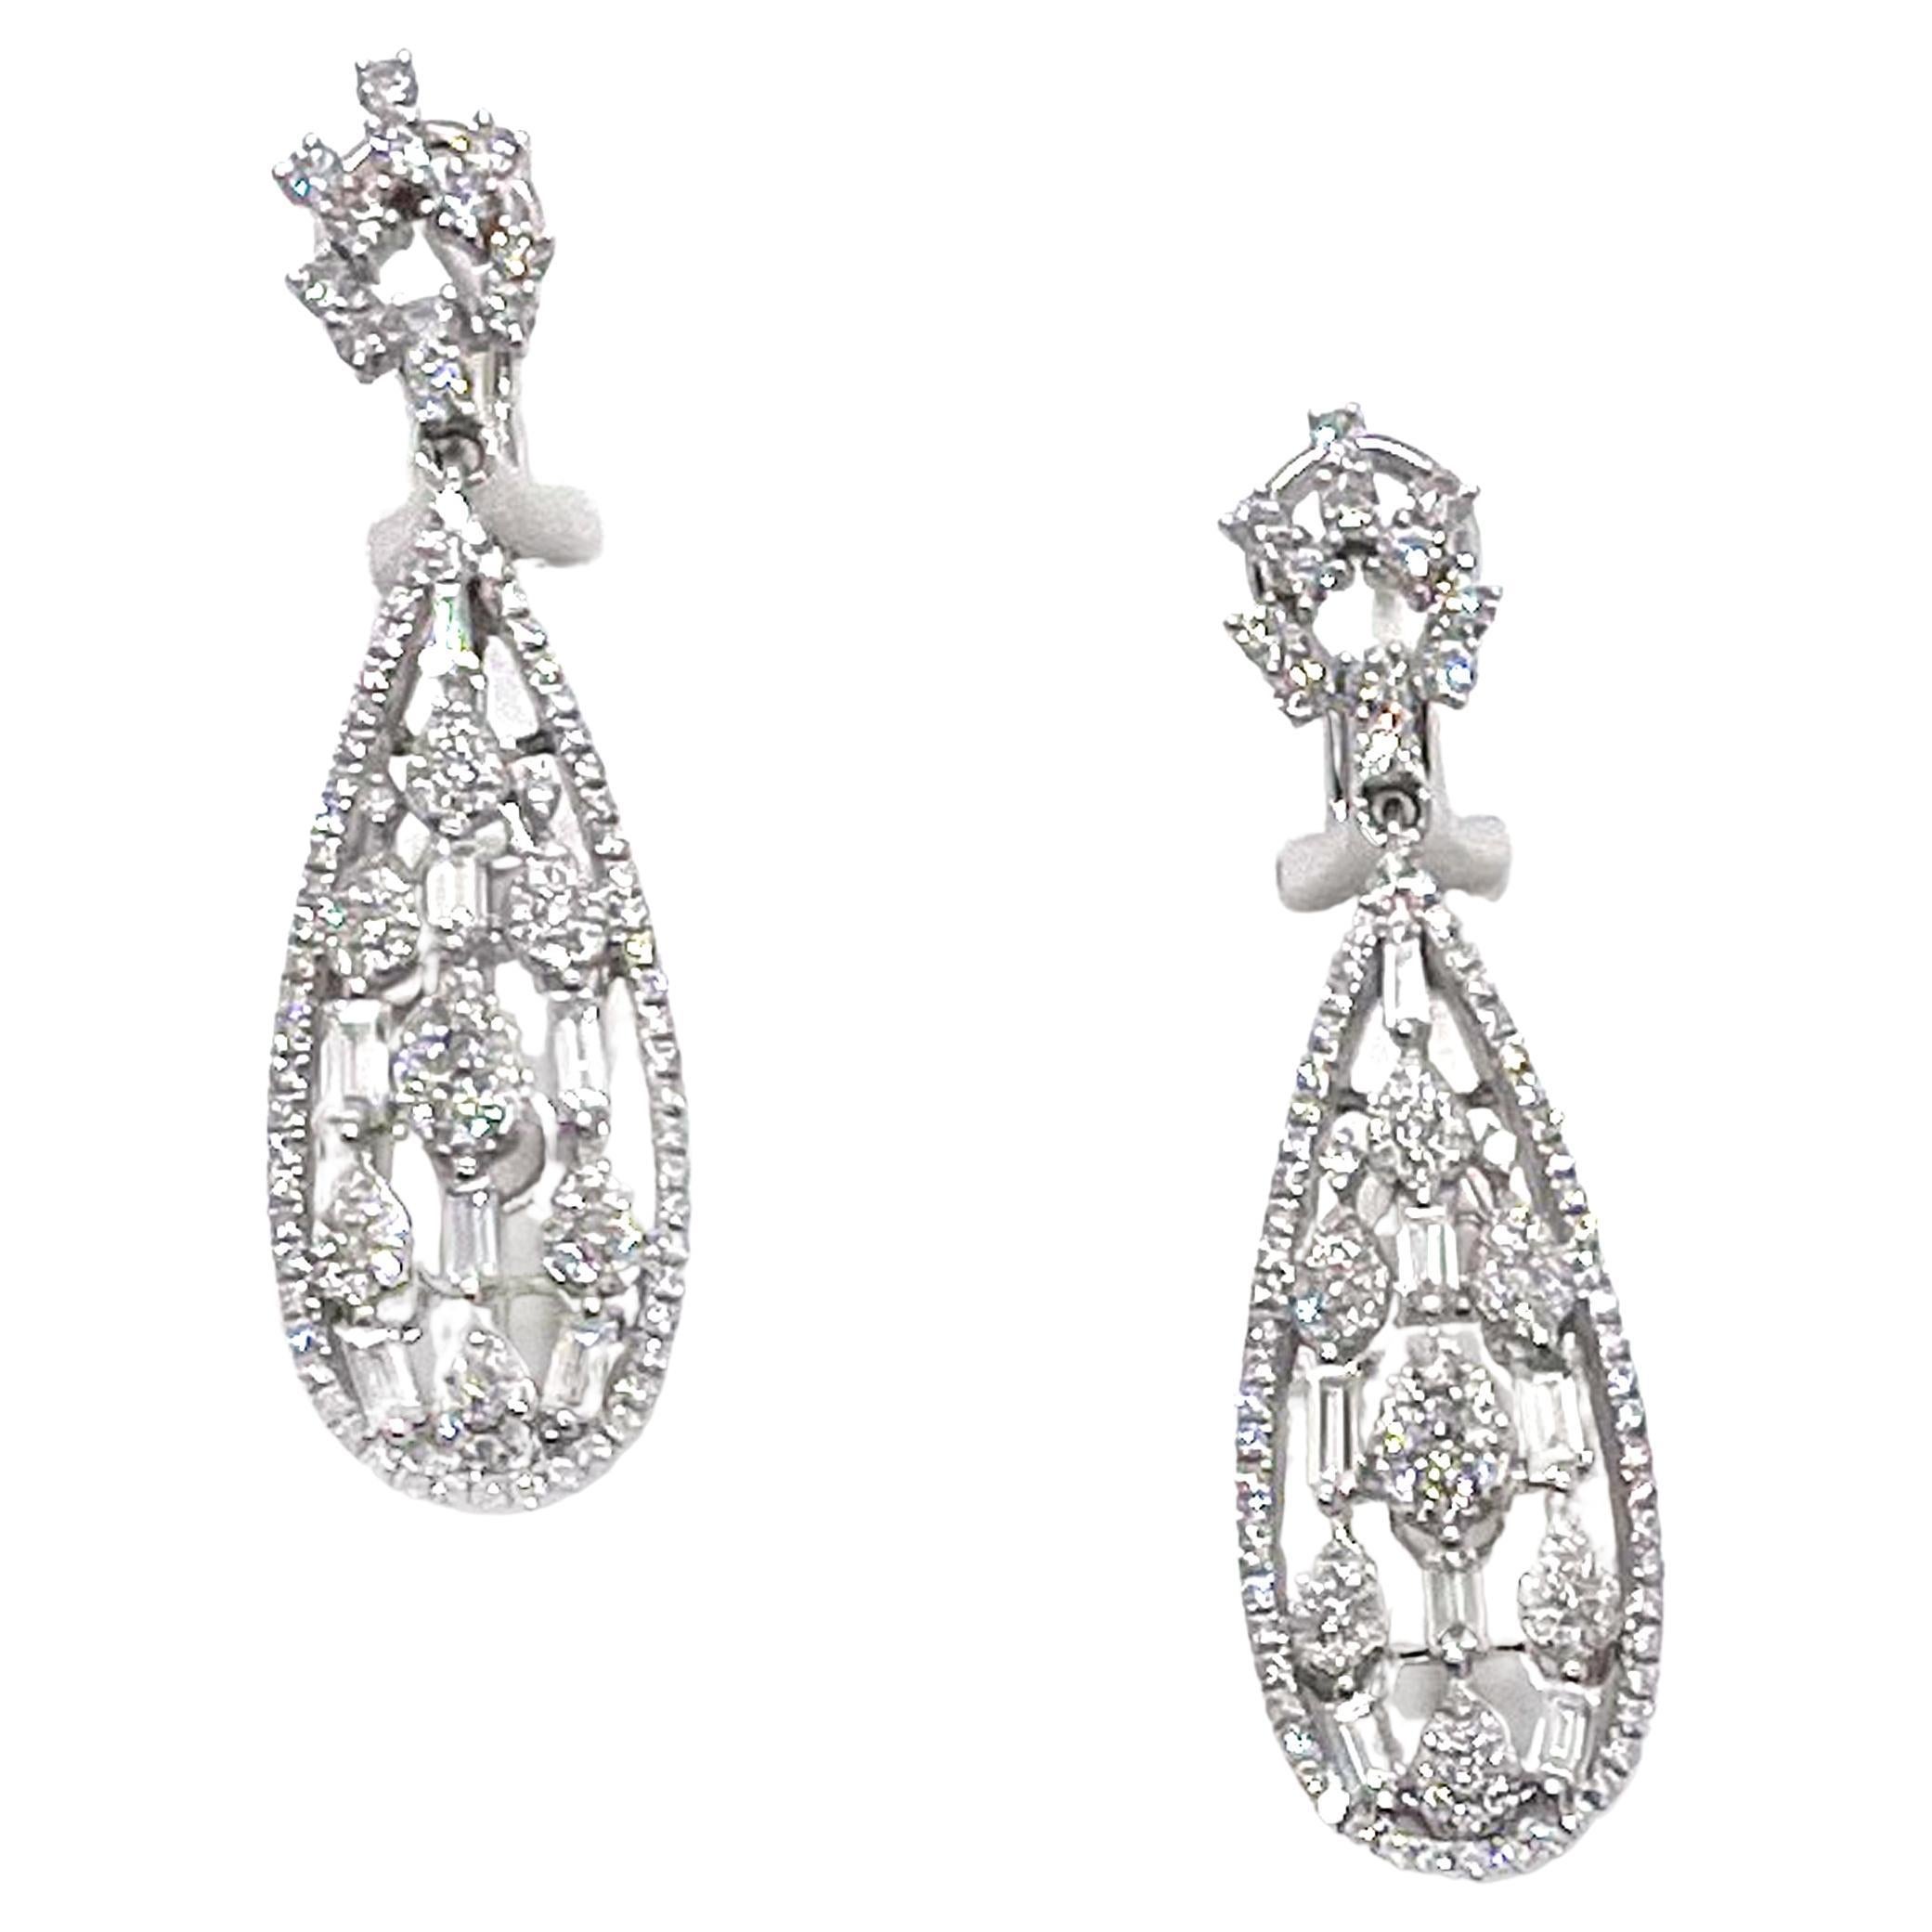 Pair of 18K White Gold Diamond Drop Dangling Earrings